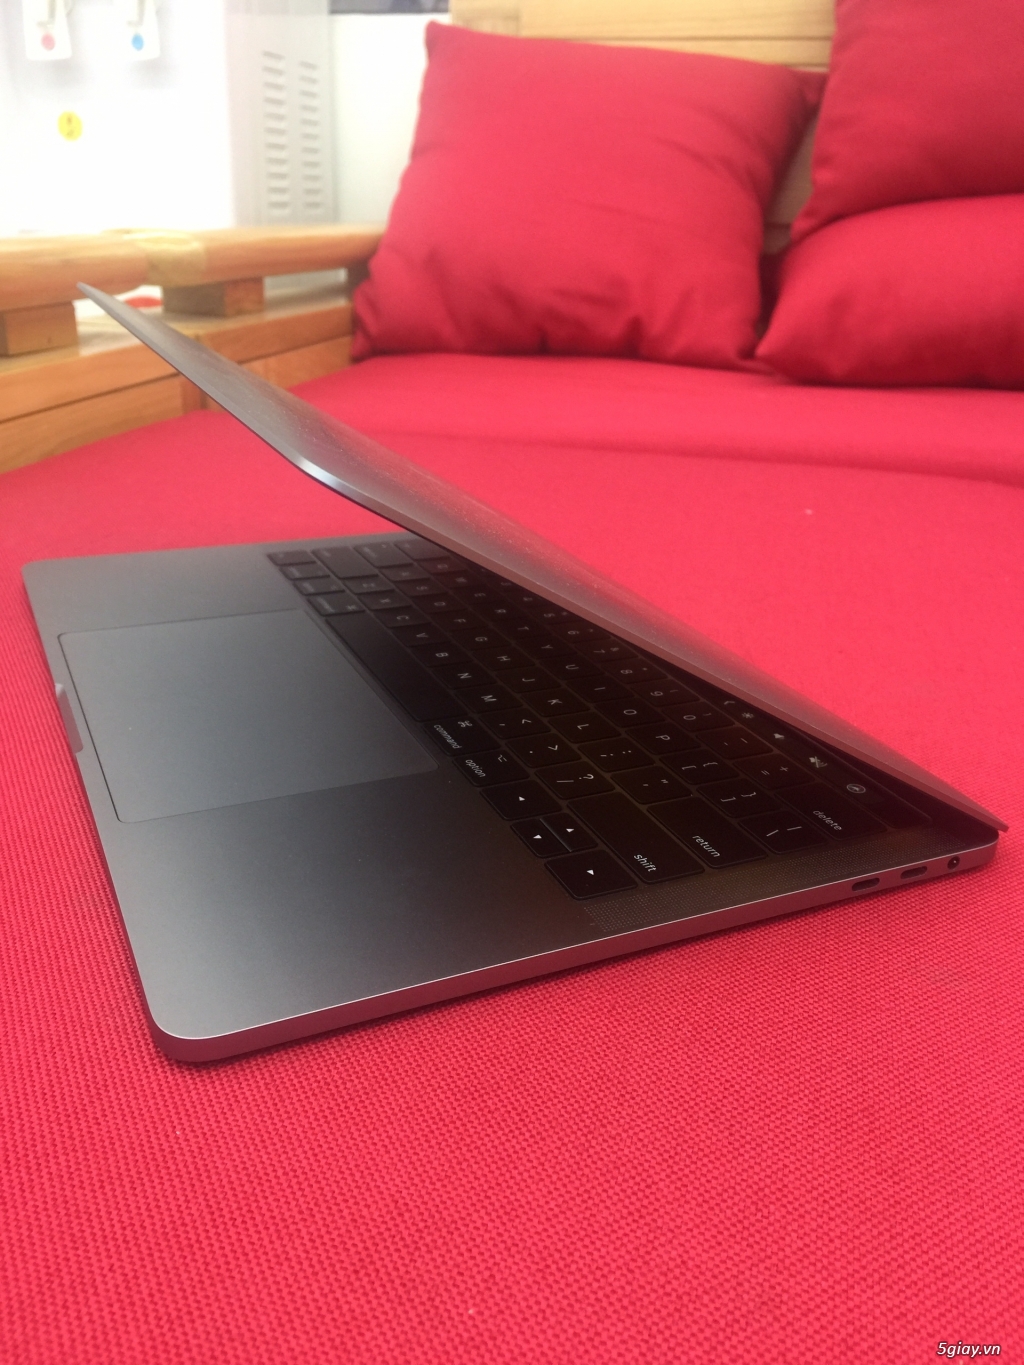 Macbook pro MLH12 touchbar core i5,ram 8,ssd 256 - 3